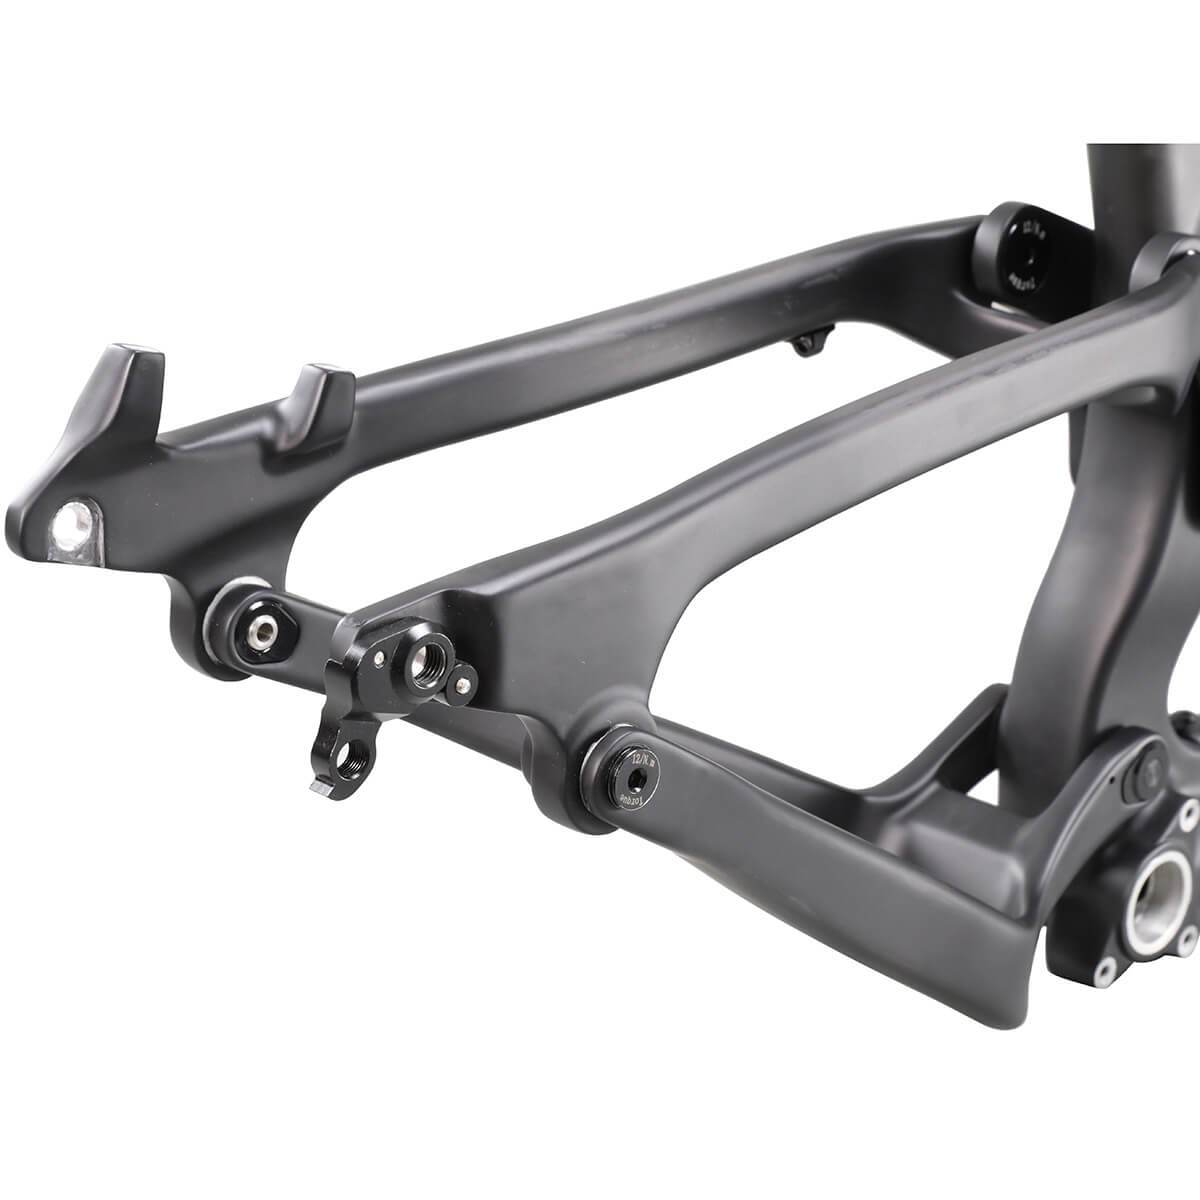 ICAN P9 Carbon Enduro MTB frame mountain bike frame 150mm travel